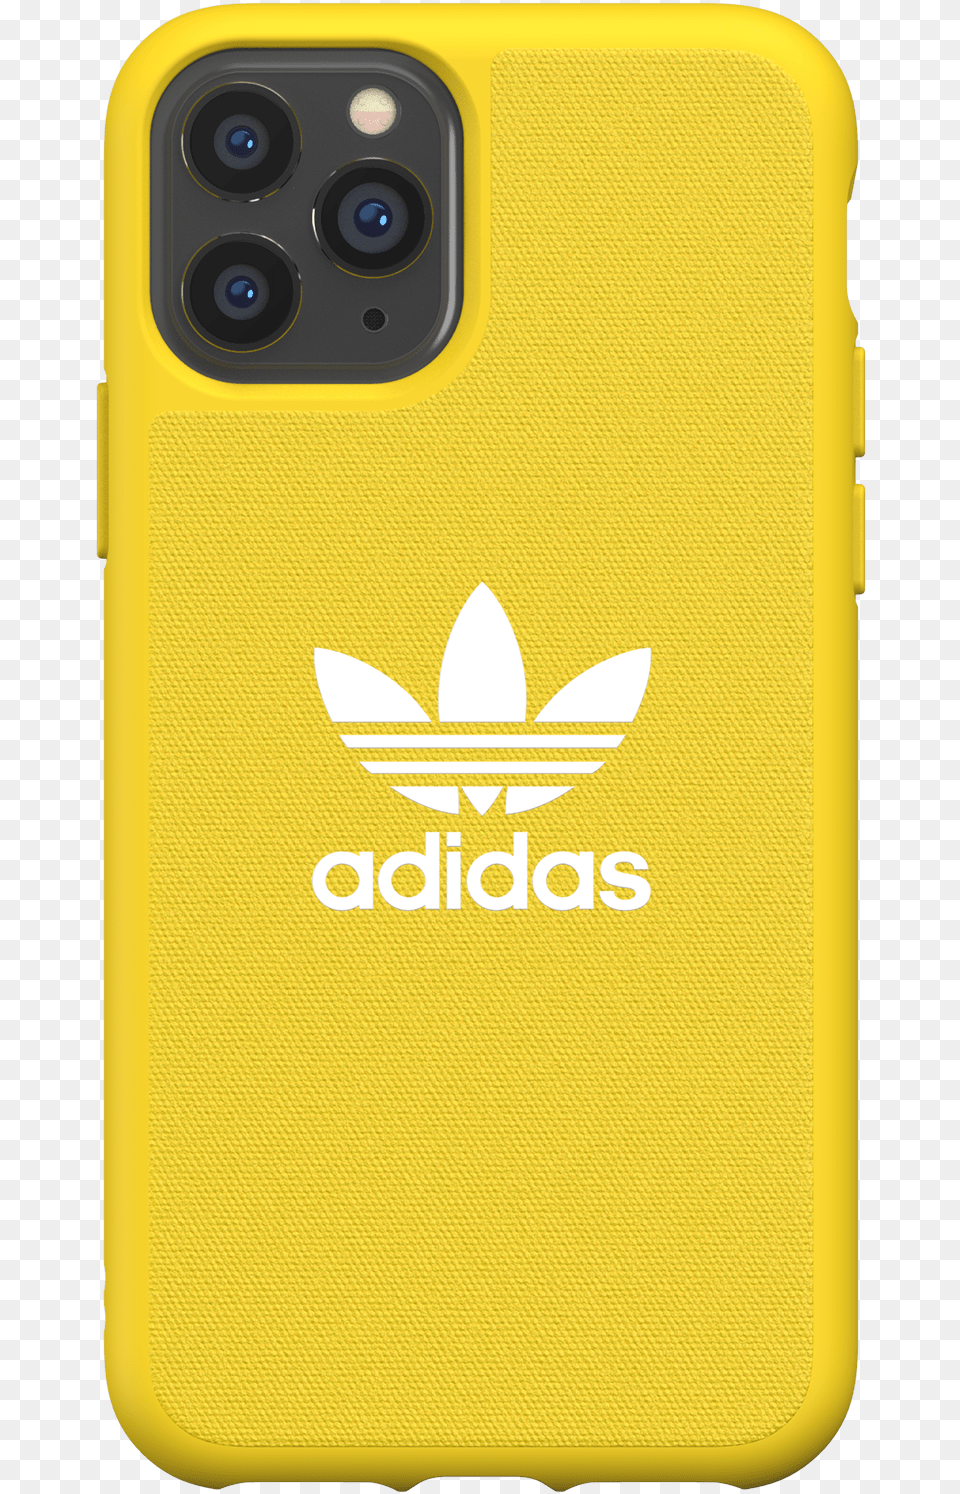 Adidas Originals Adidas Originals, Electronics, Mobile Phone, Phone Png Image